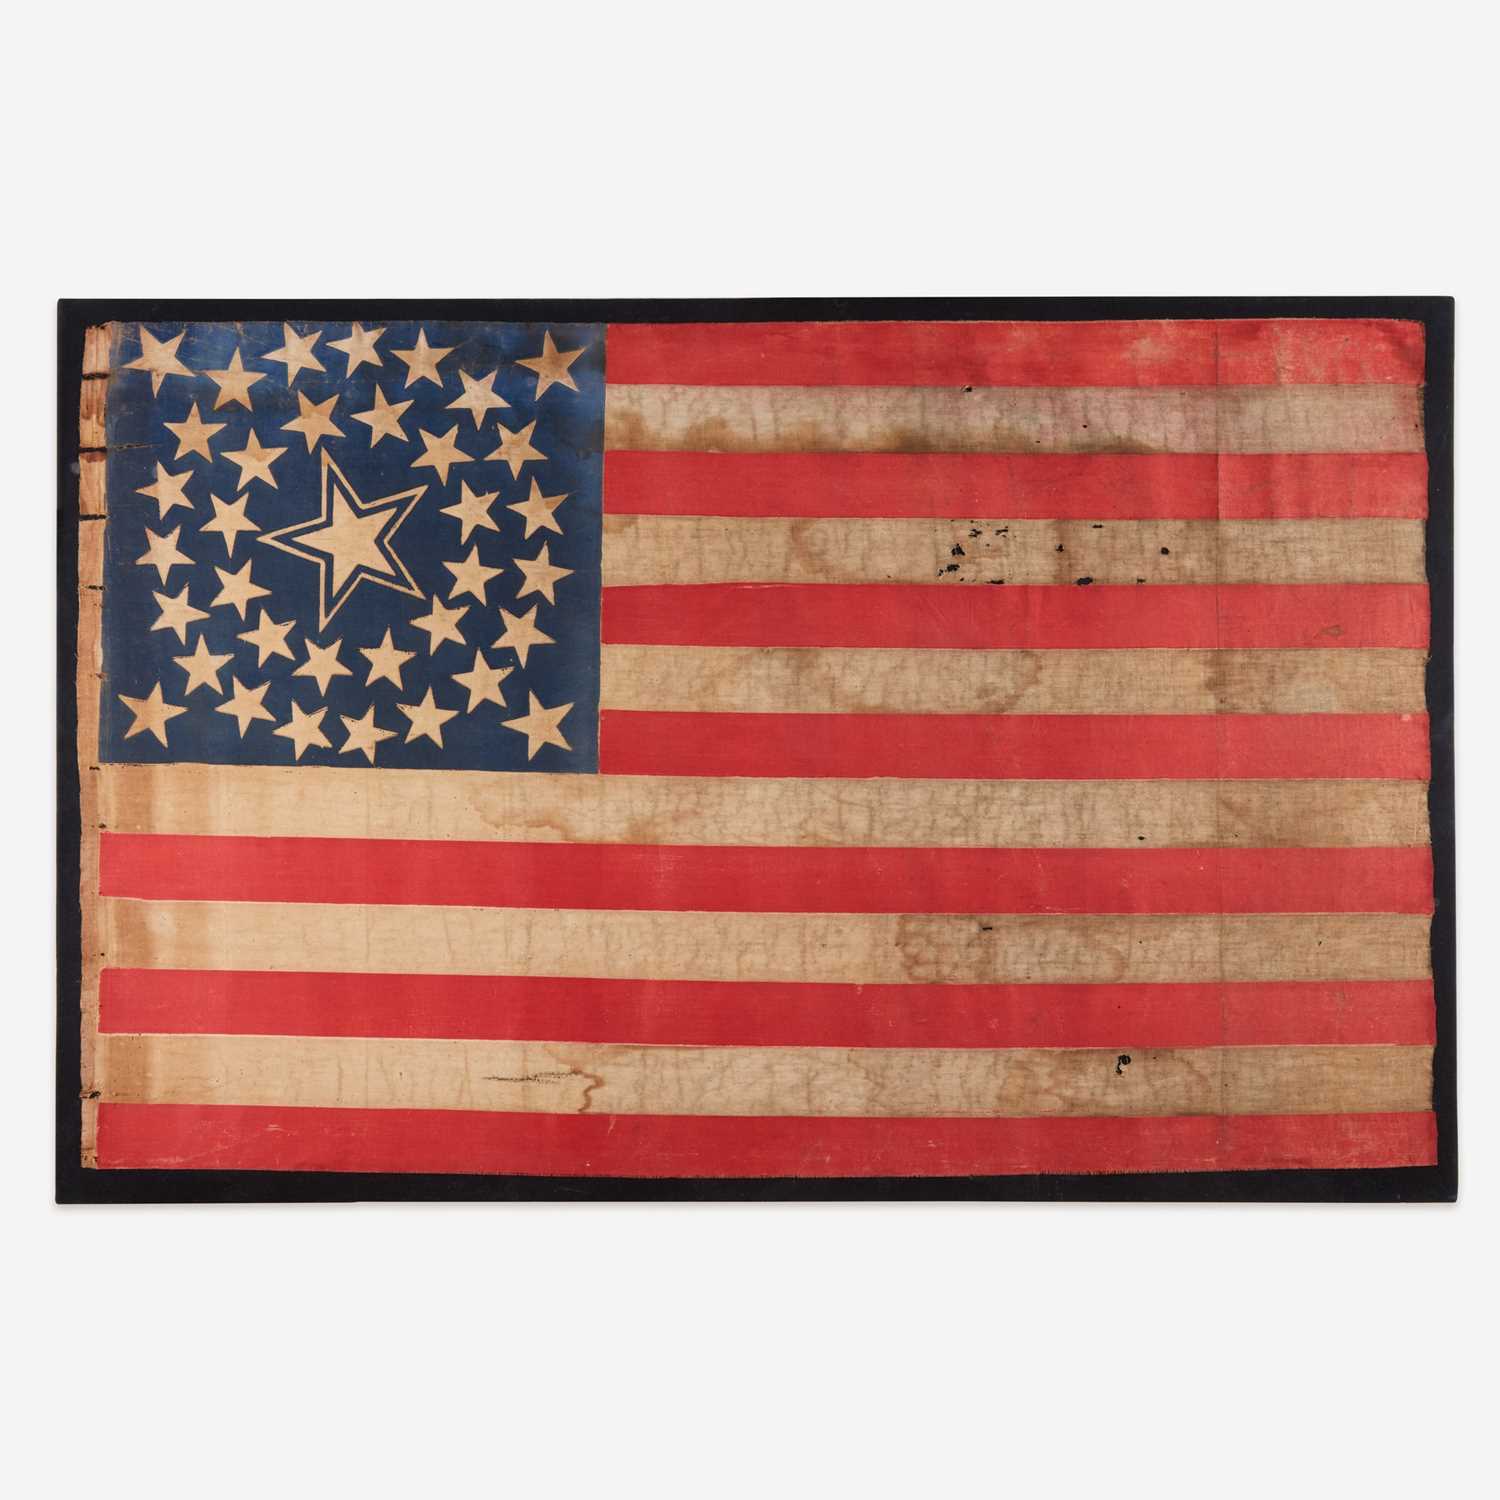 Lot 33 - A 42-Star printed American Parade Flag commemorating Washington statehood